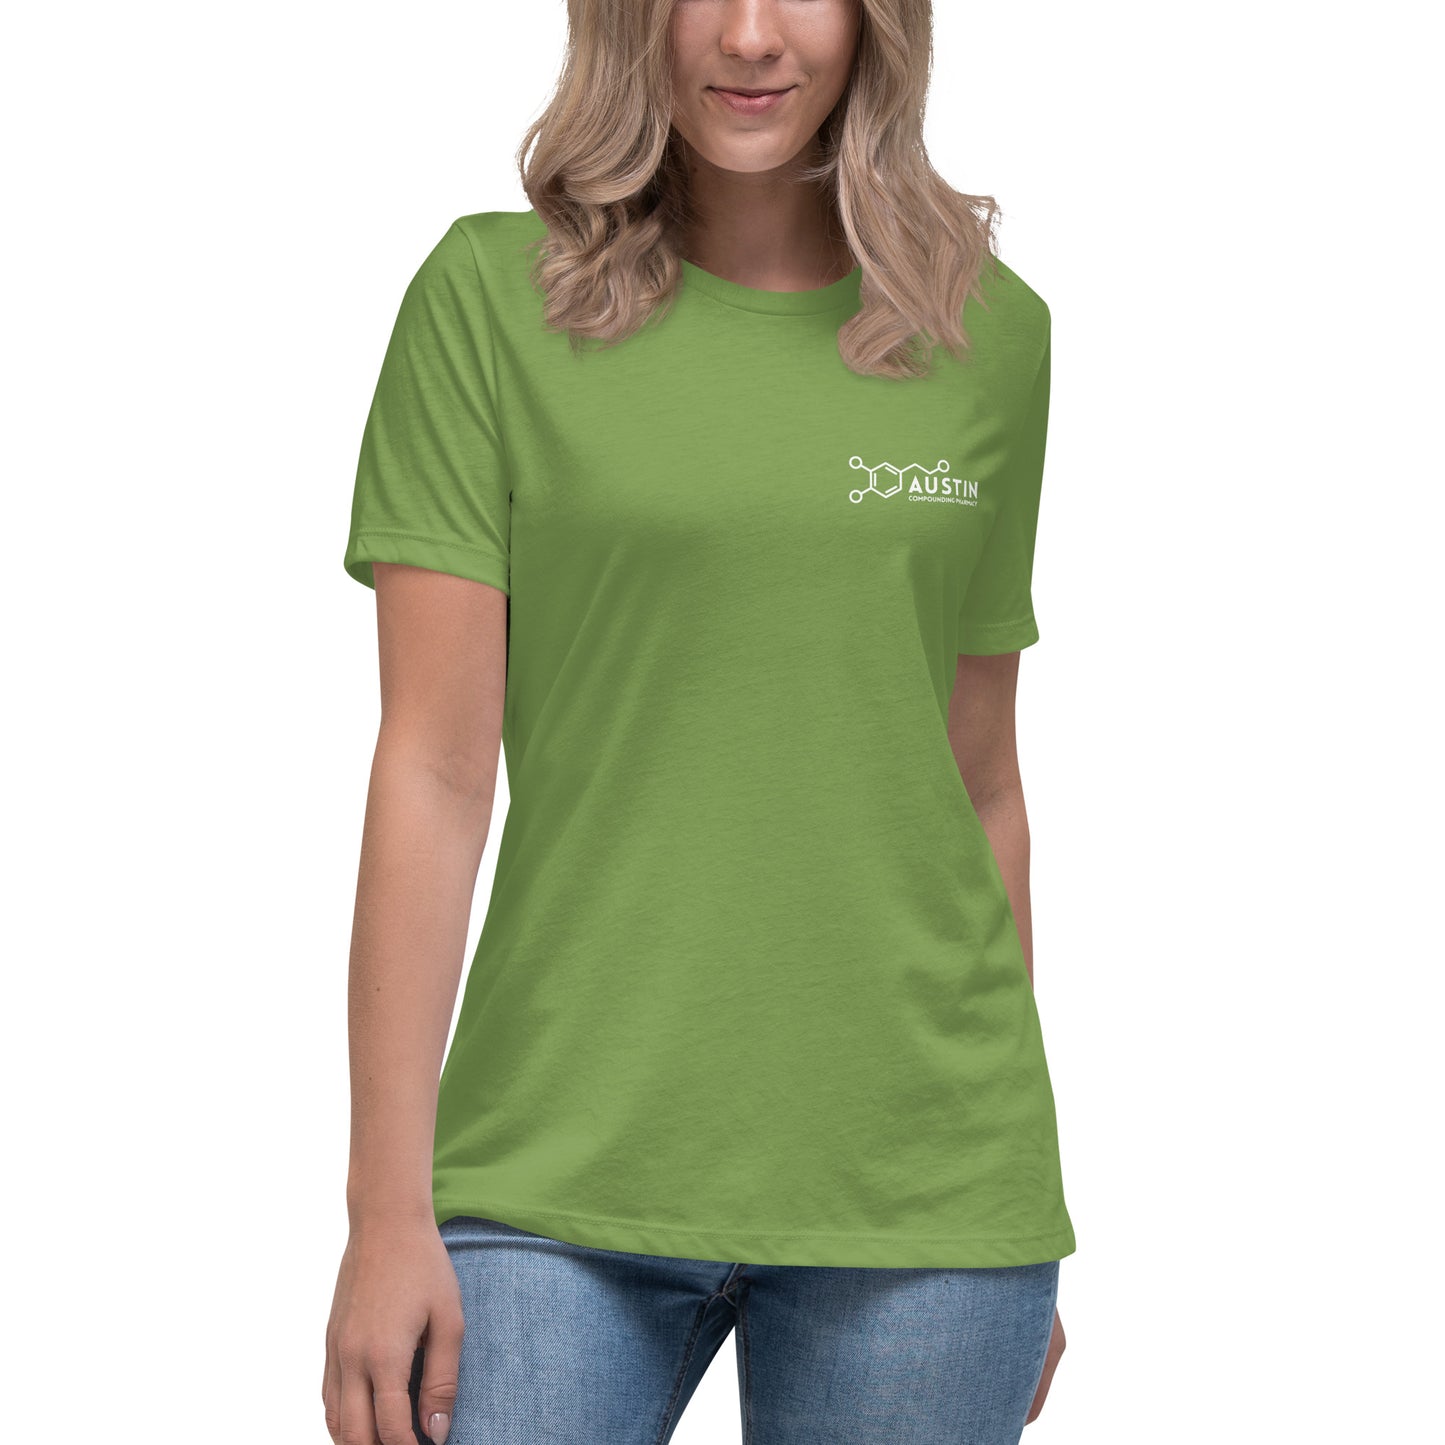 Women's Classic T-Shirt - Austin Compounding